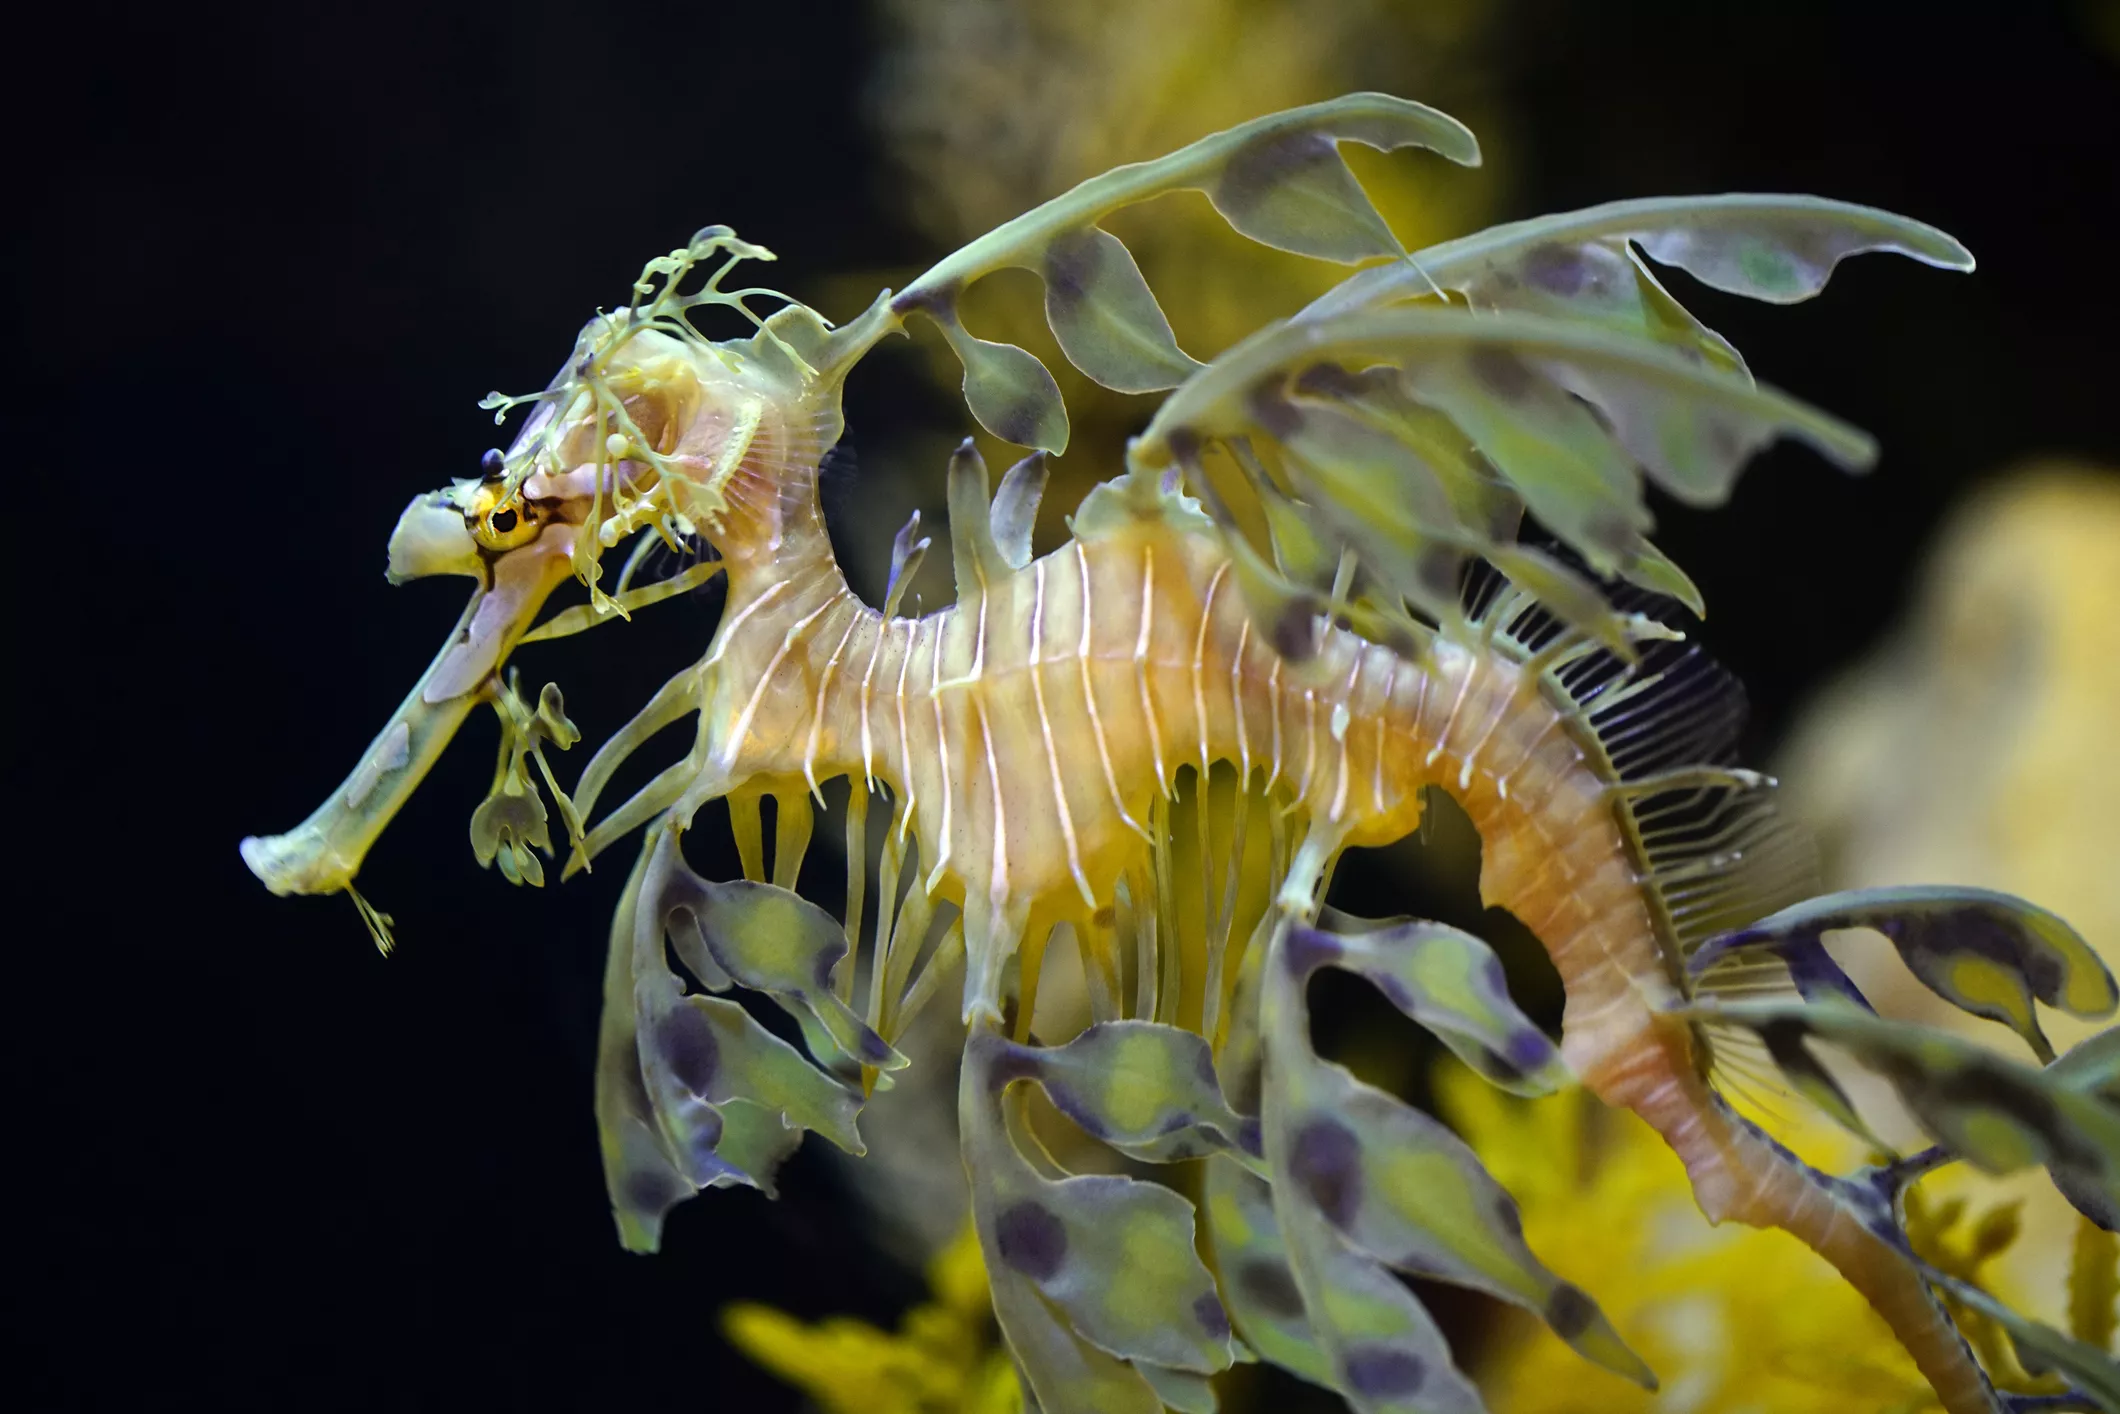 A sea creature with complex fins that resemble sea plants